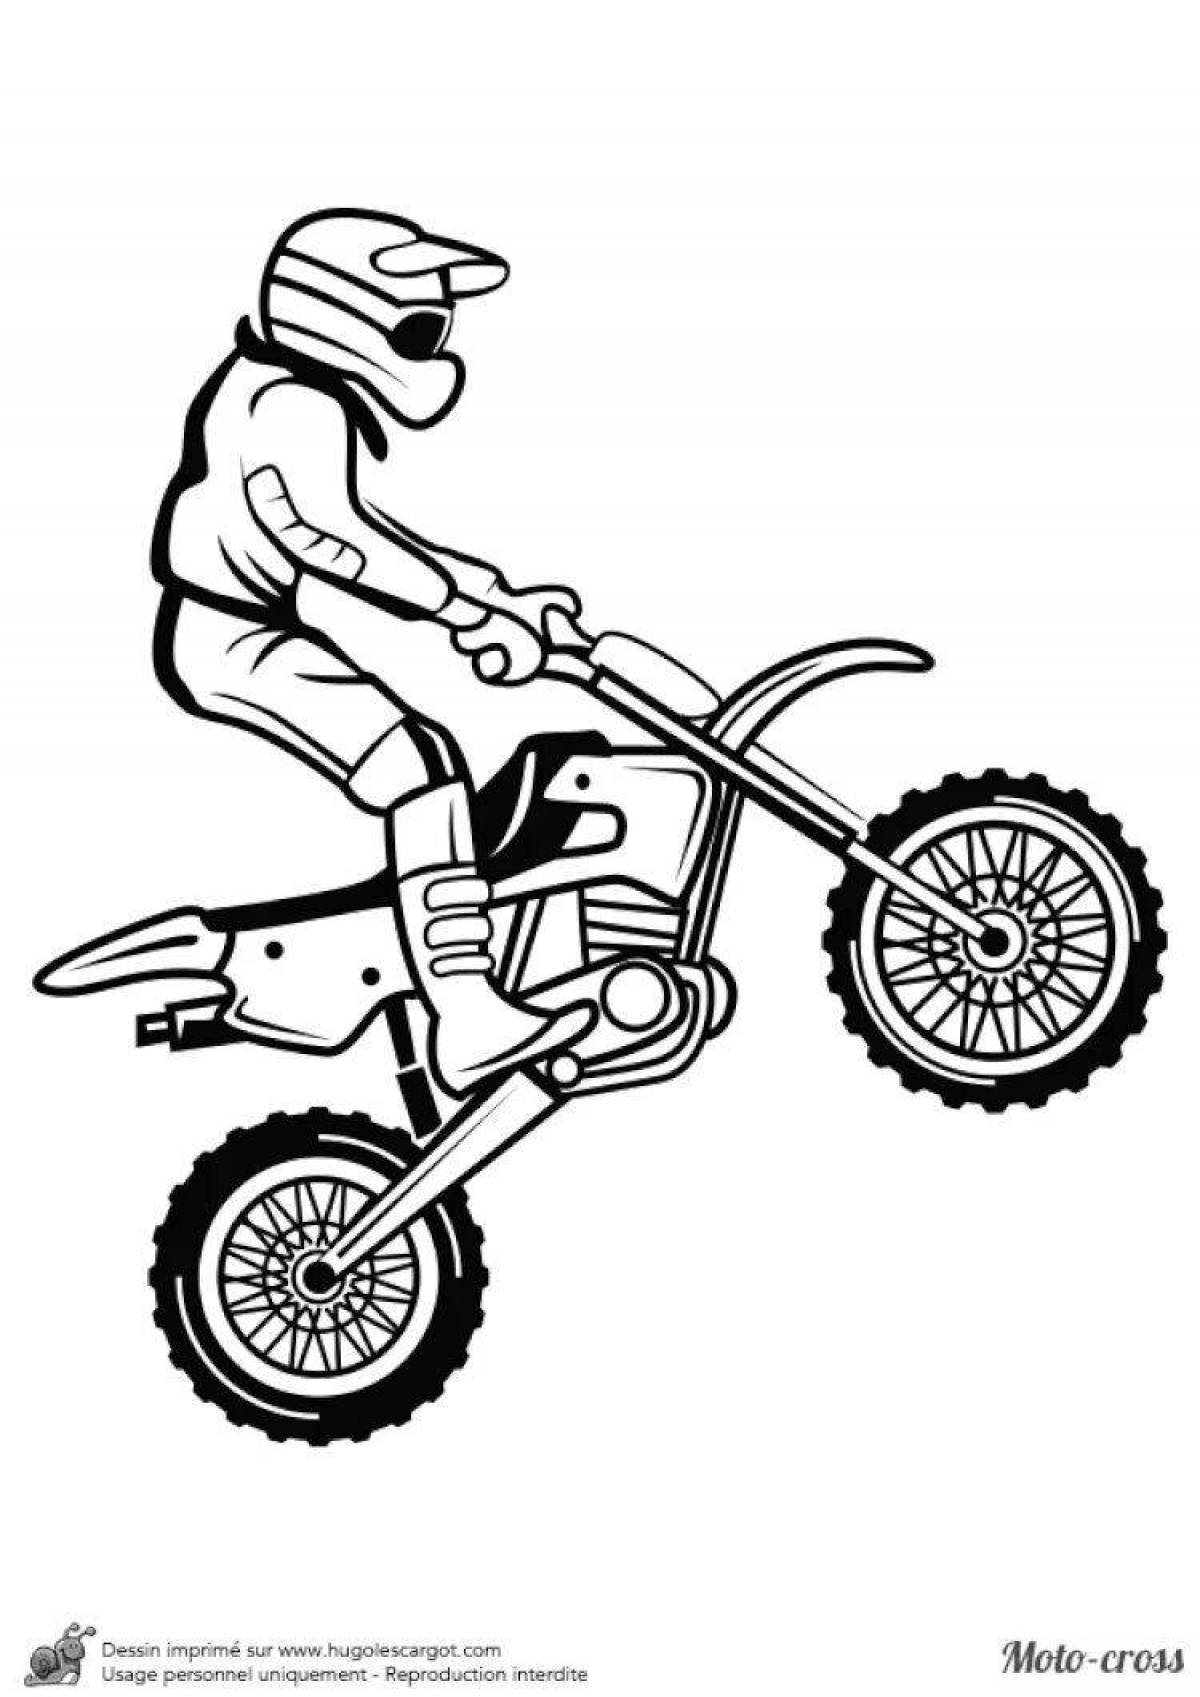 Joyful motocross coloring page